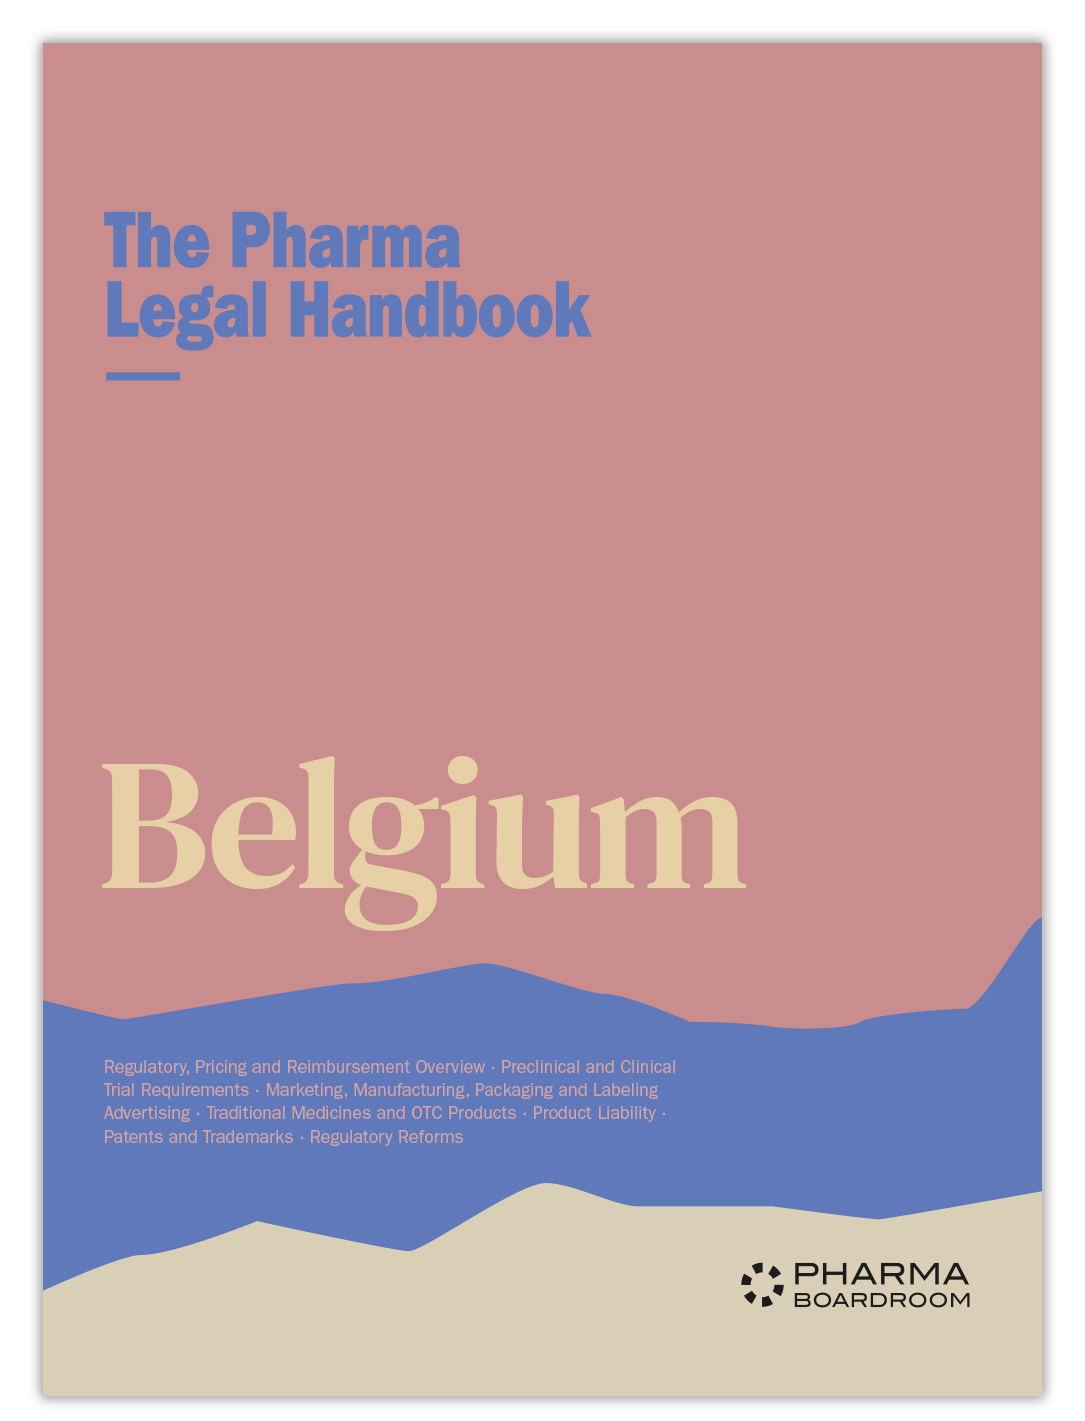 The Pharma Legal Handbook: Belgium